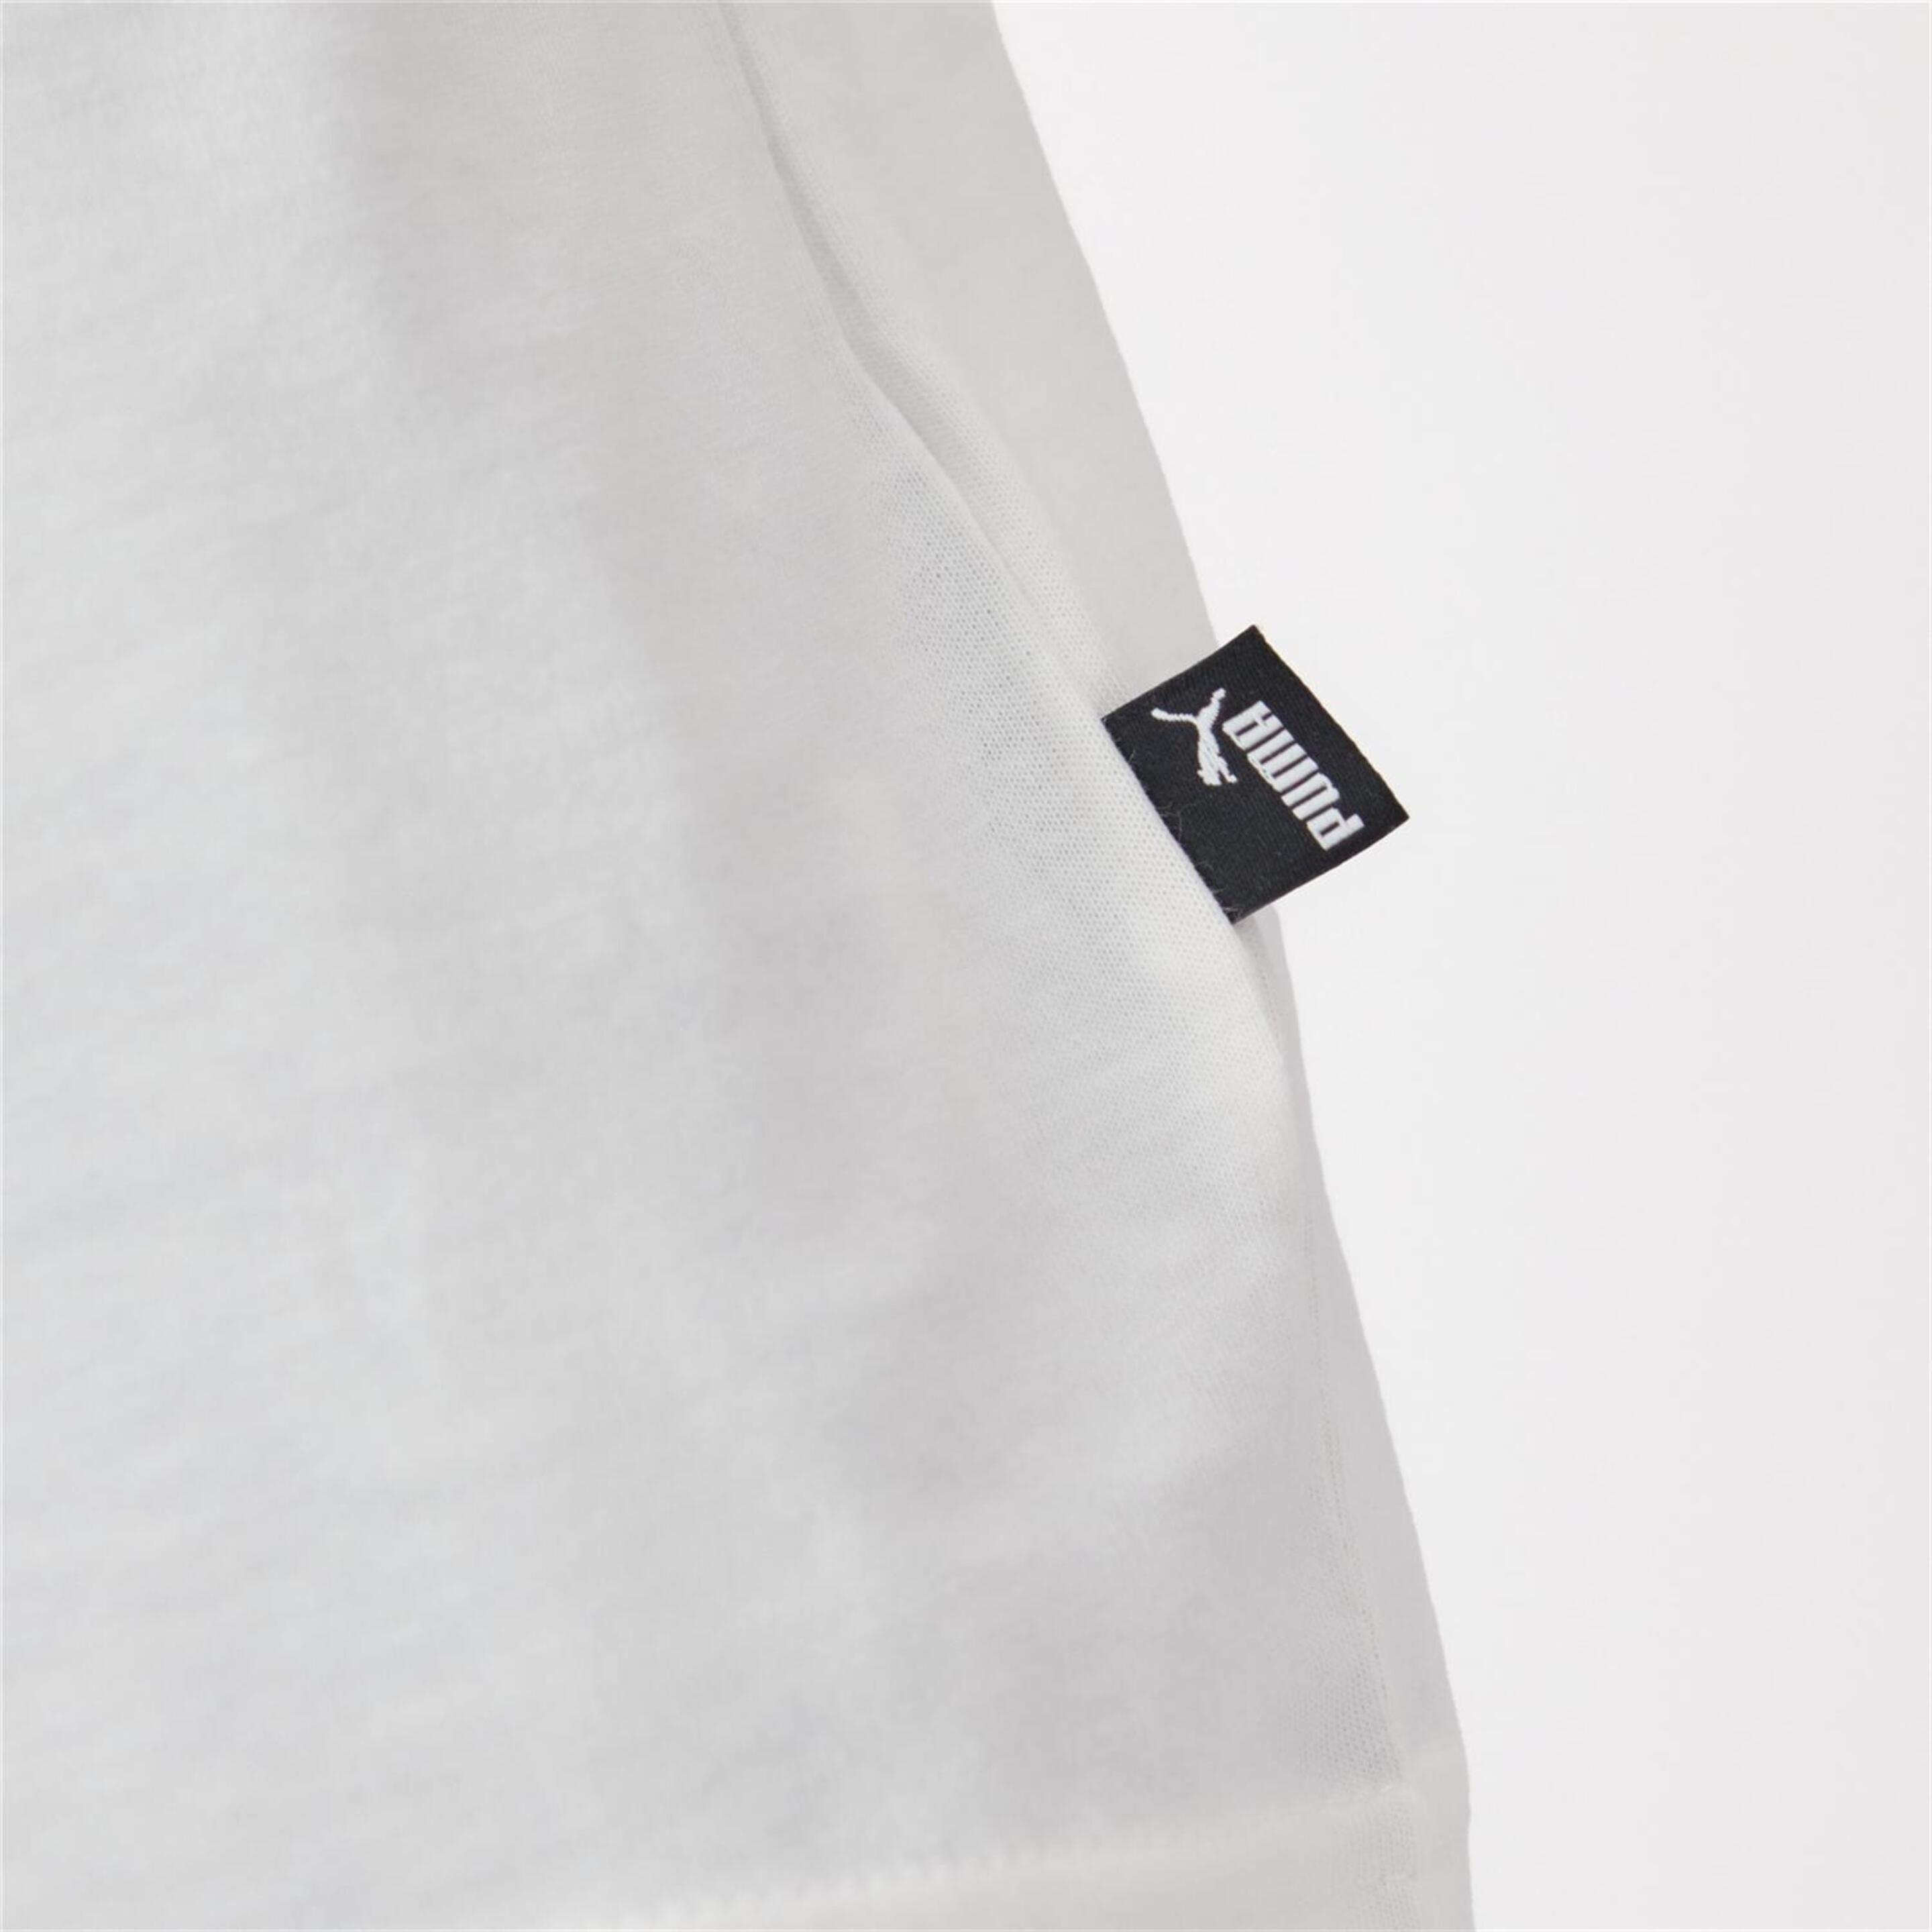 Puma Graphics - Blanco - Camiseta Hombre